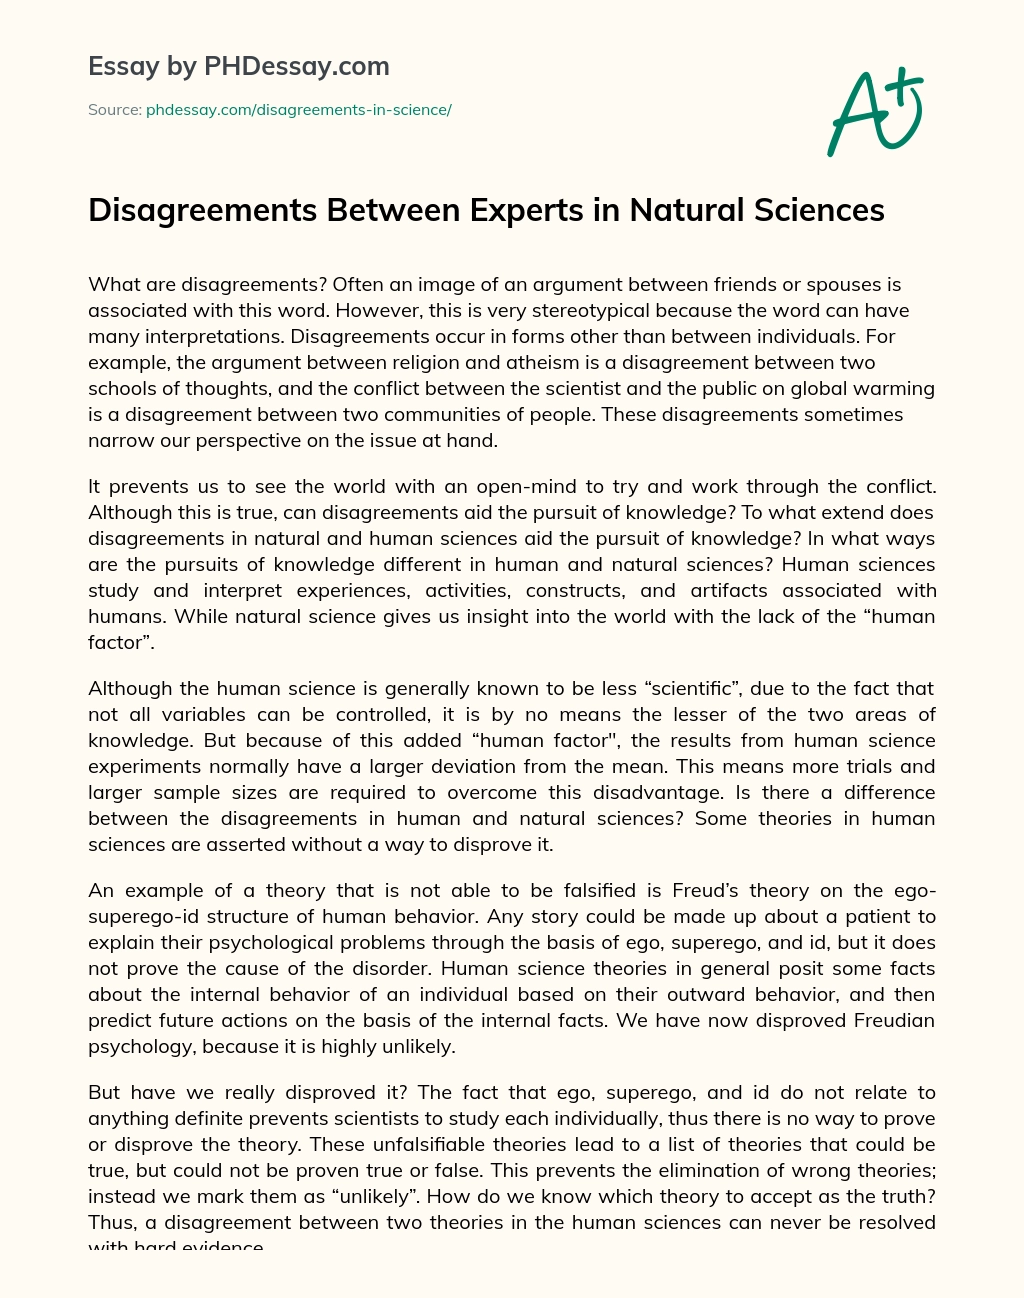 Disagreements Between Experts in Natural Sciences essay